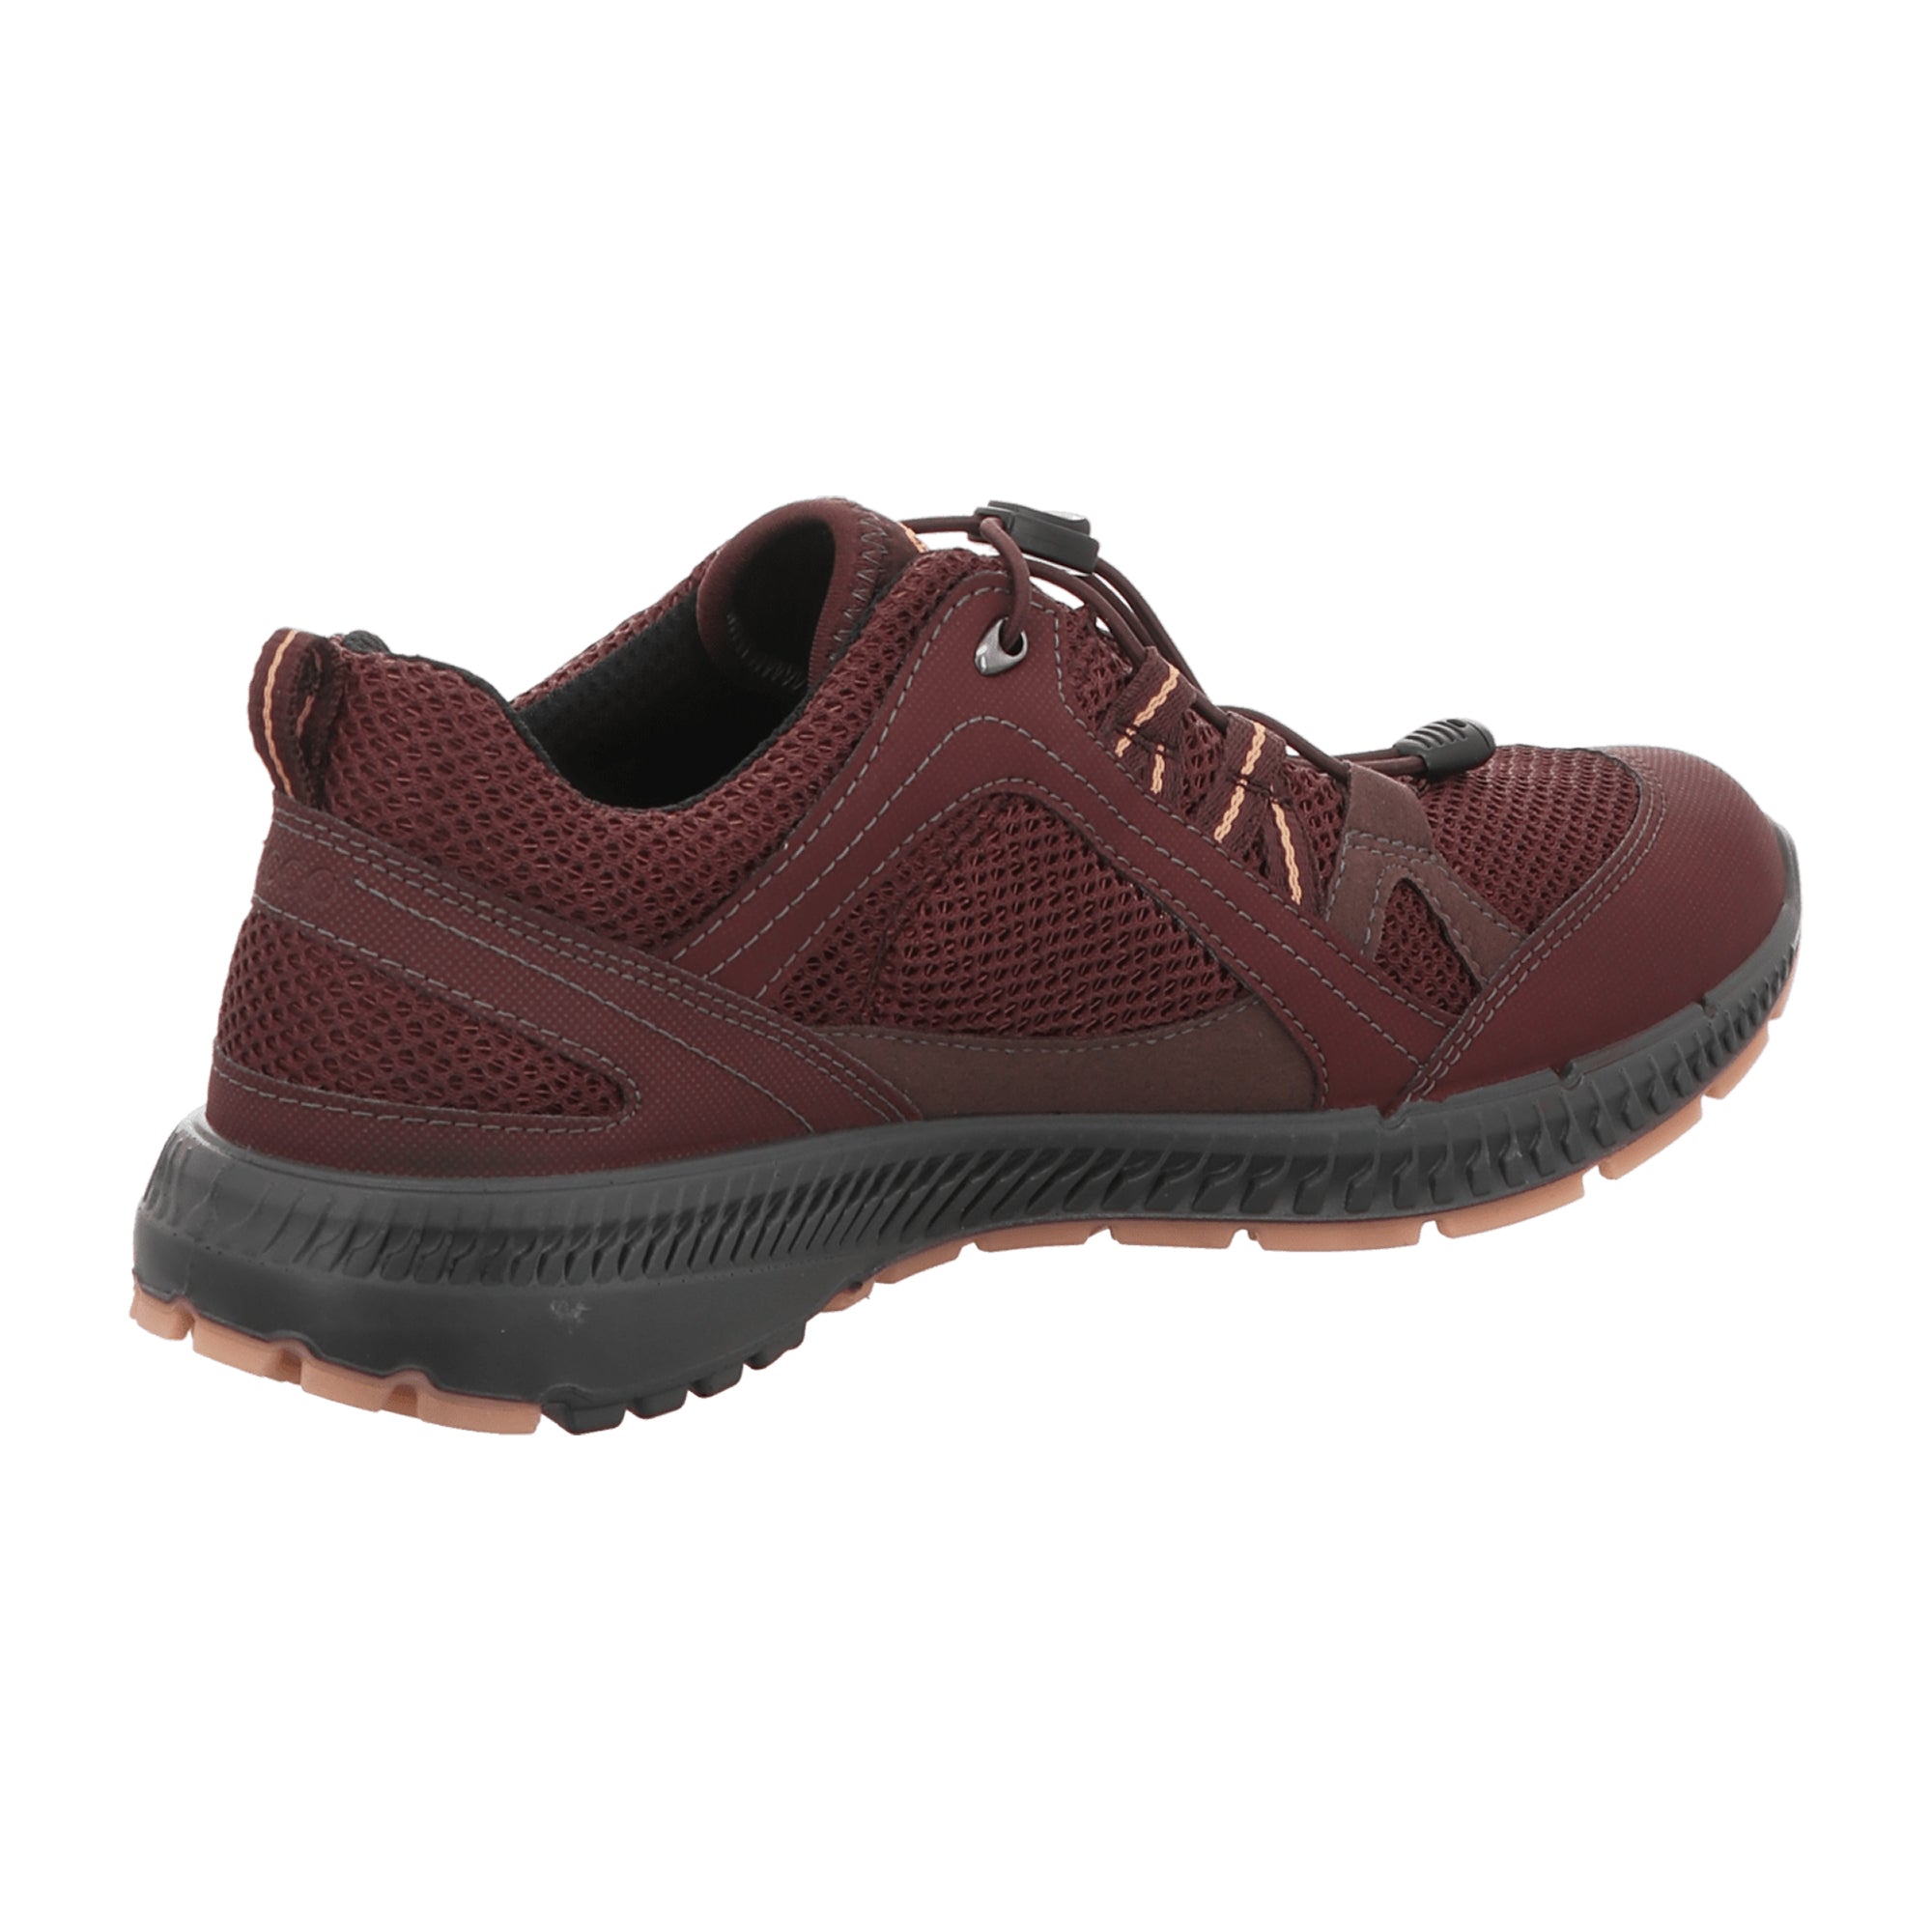 Ecco Terracruise II Women's Red Walking Shoes - Lightweight & Durable Outdoor Trainers